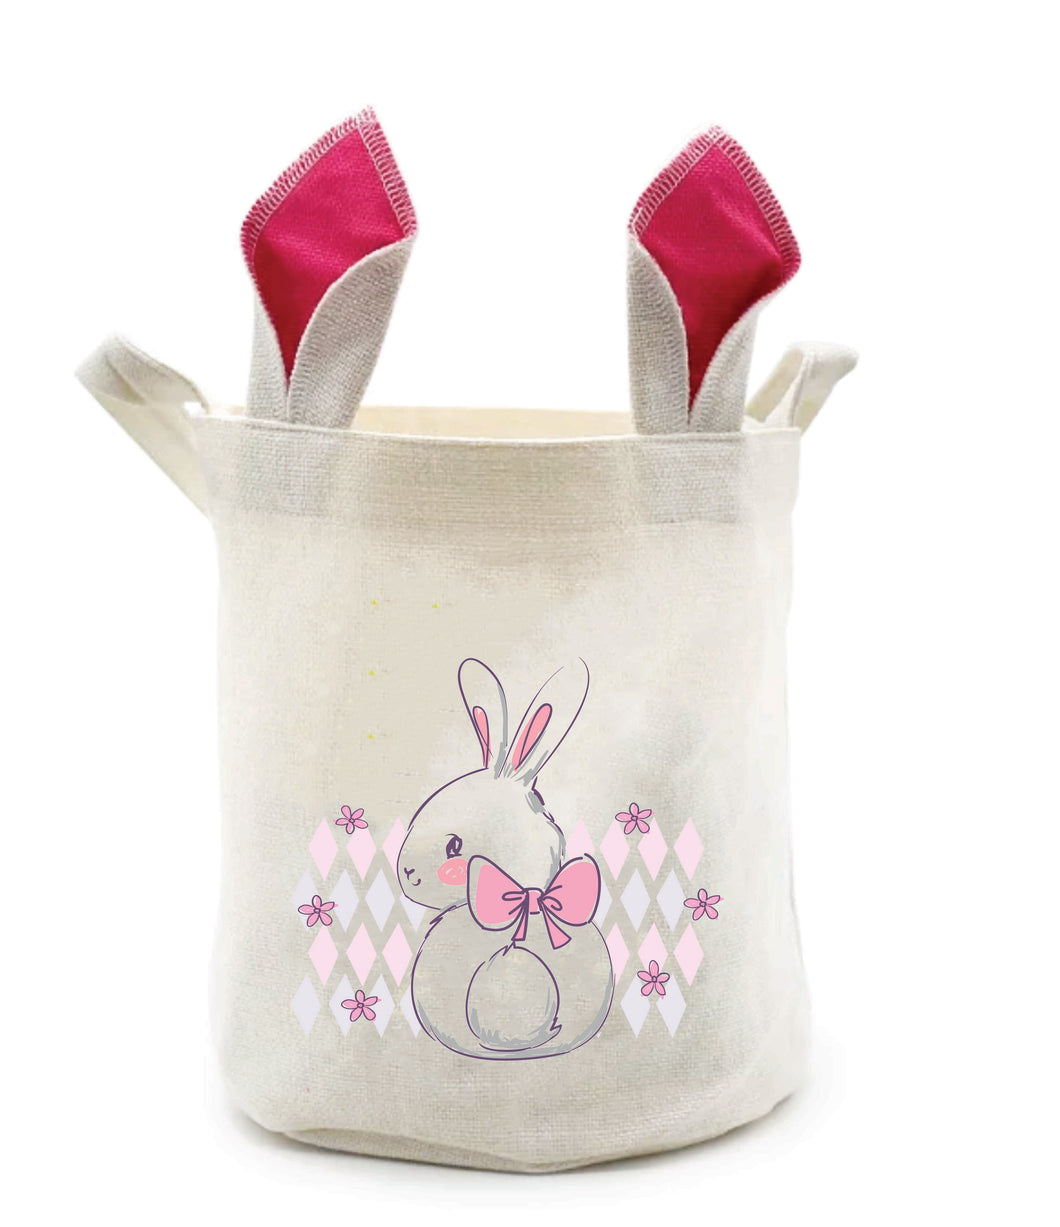 Cloth bag with pink bunny ears